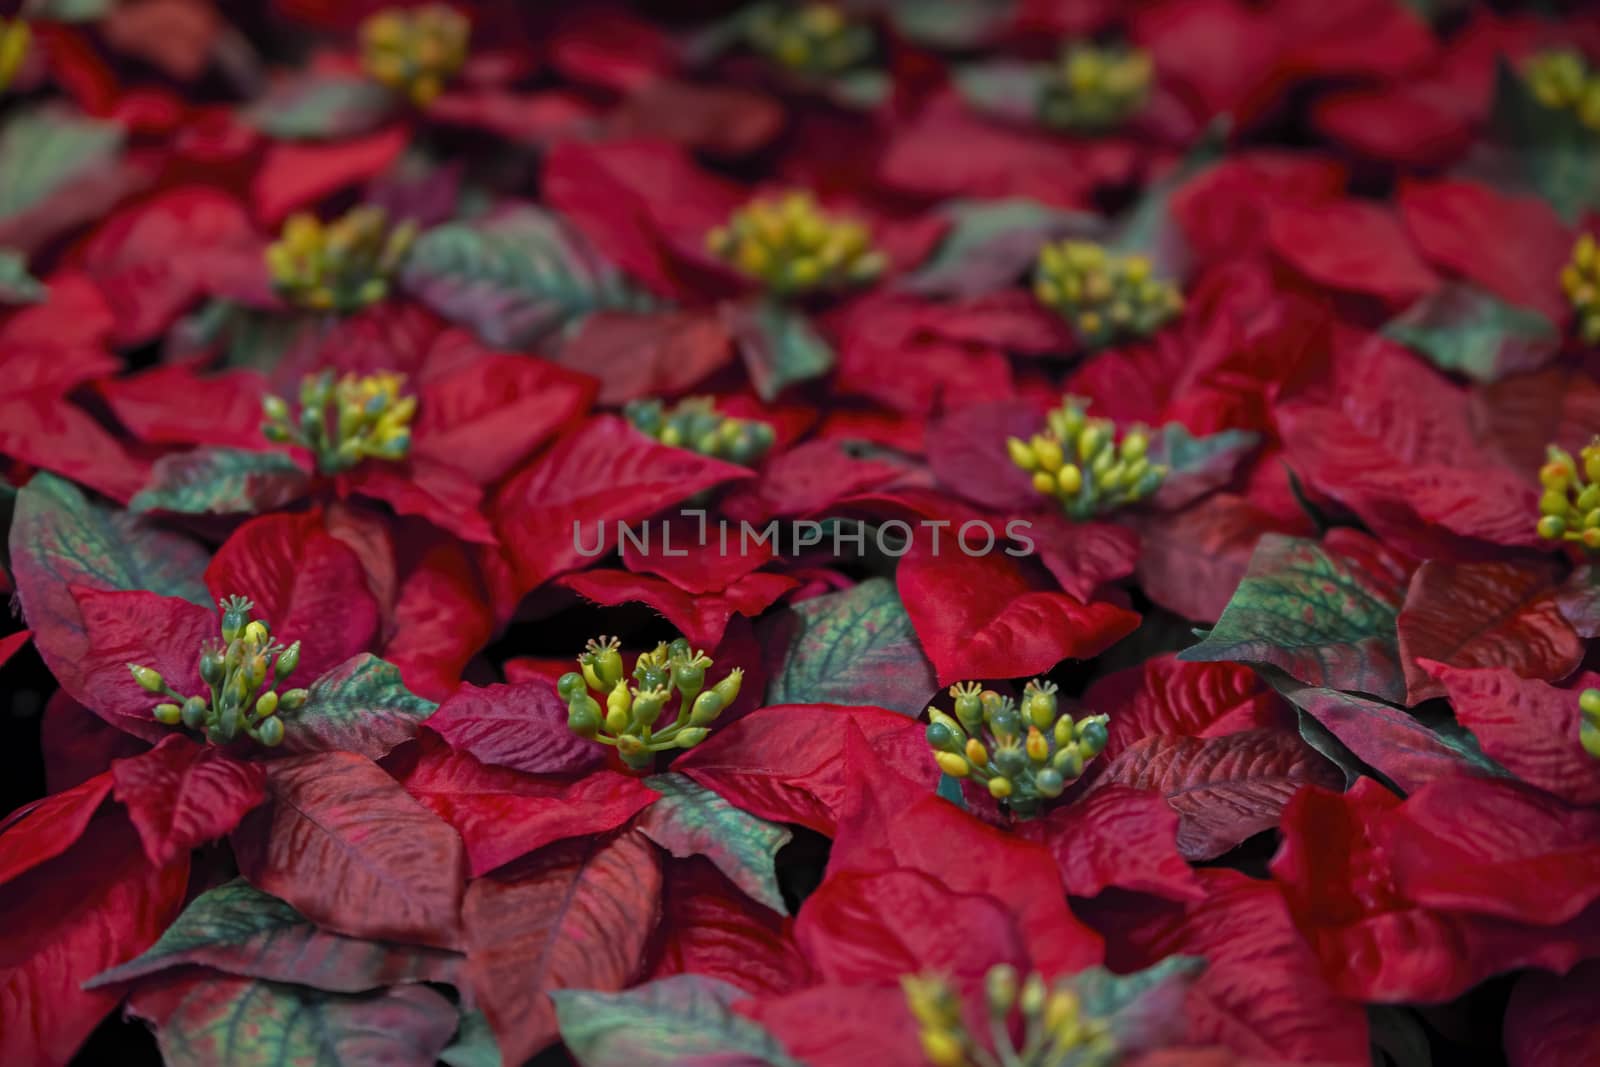 Closeup of red poinsettia flowers Euphorbia pulcherrima by bonilook